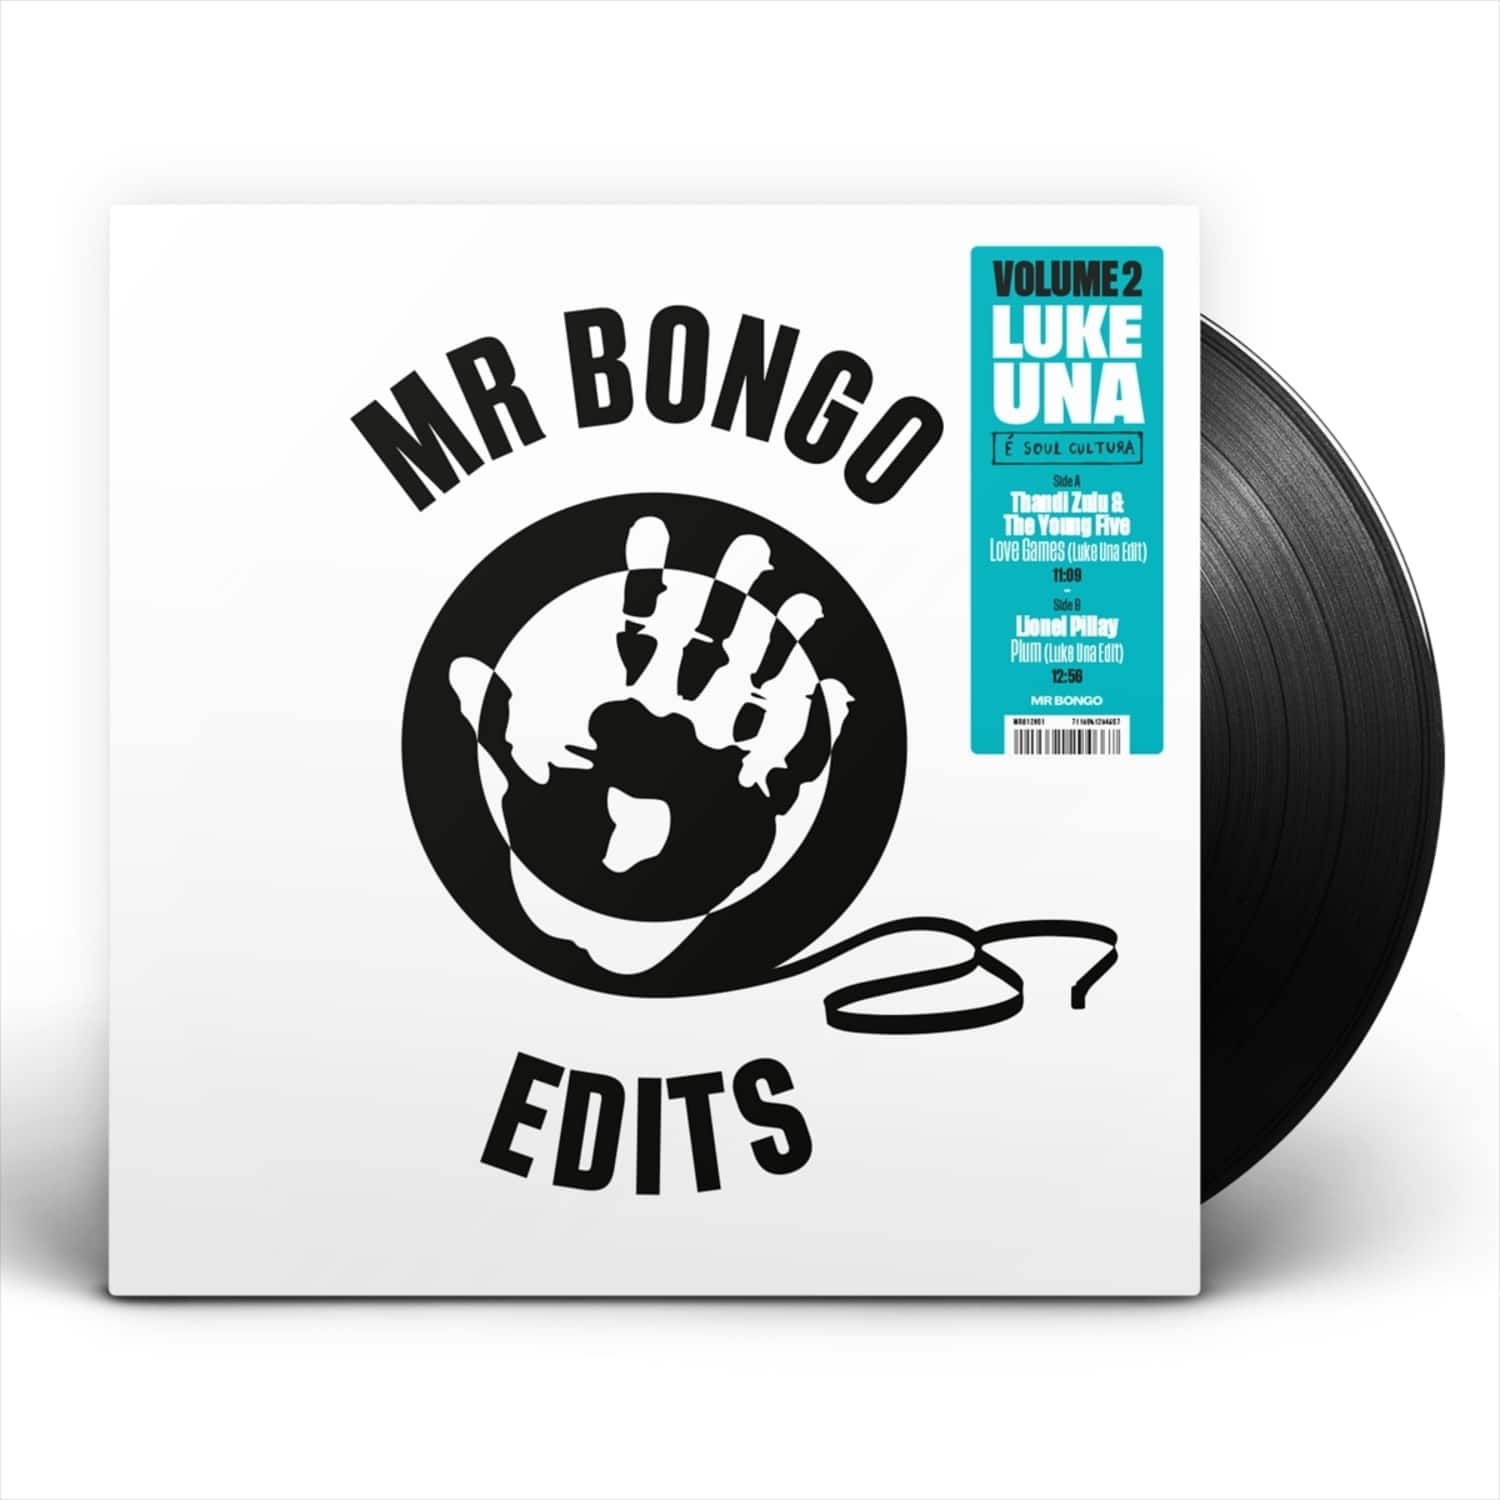 Various - MR BONGO EDITS VOLUME 2: LUKE UNA